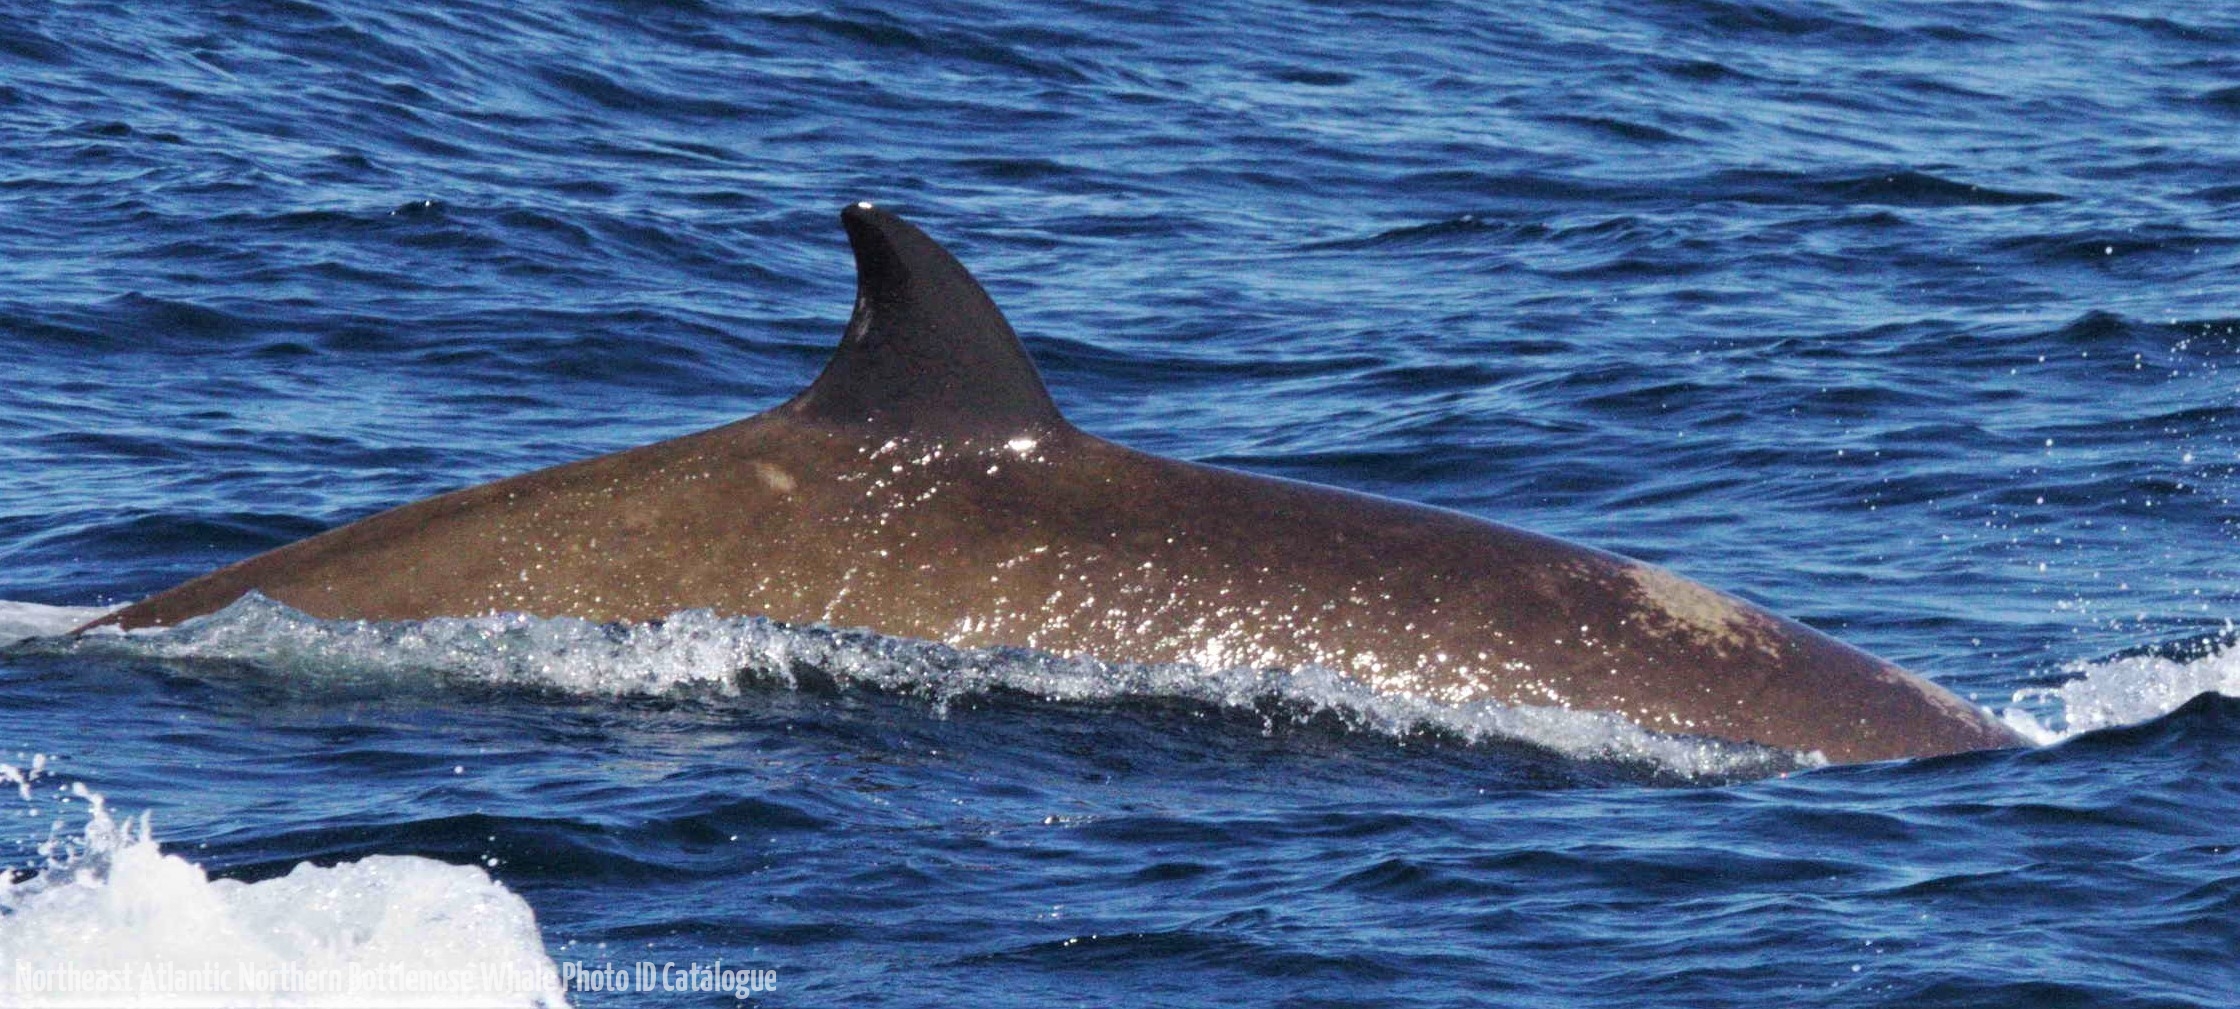 Whale ID: 0300,  Date taken: 14-06-2014,  Photographer: Lucia M. Martín López